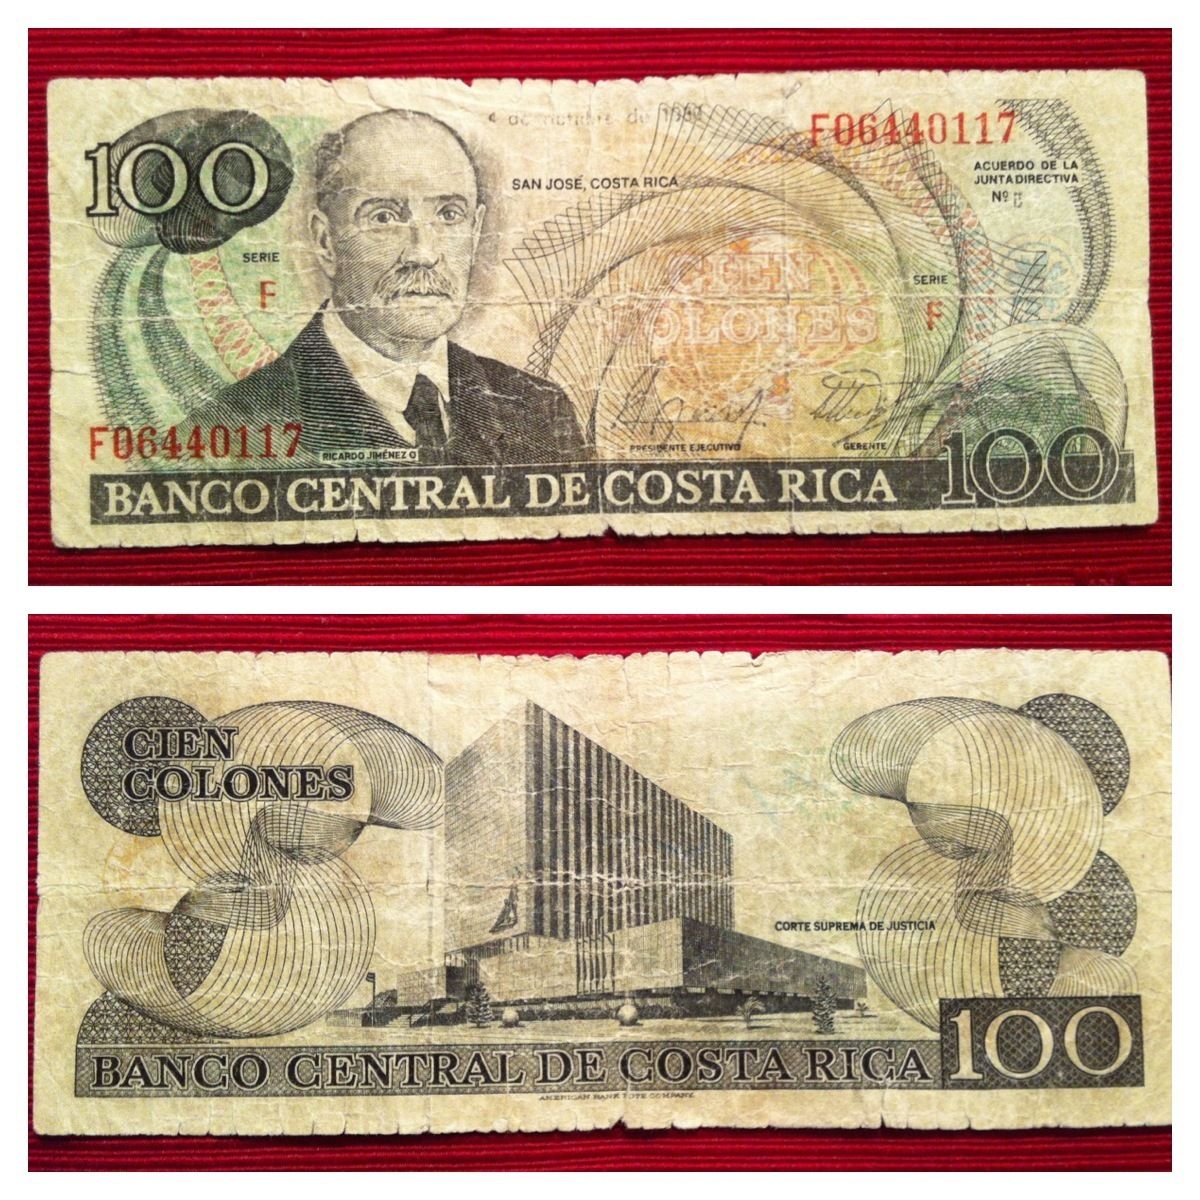 100 Colons Banco Central de Costa Rica